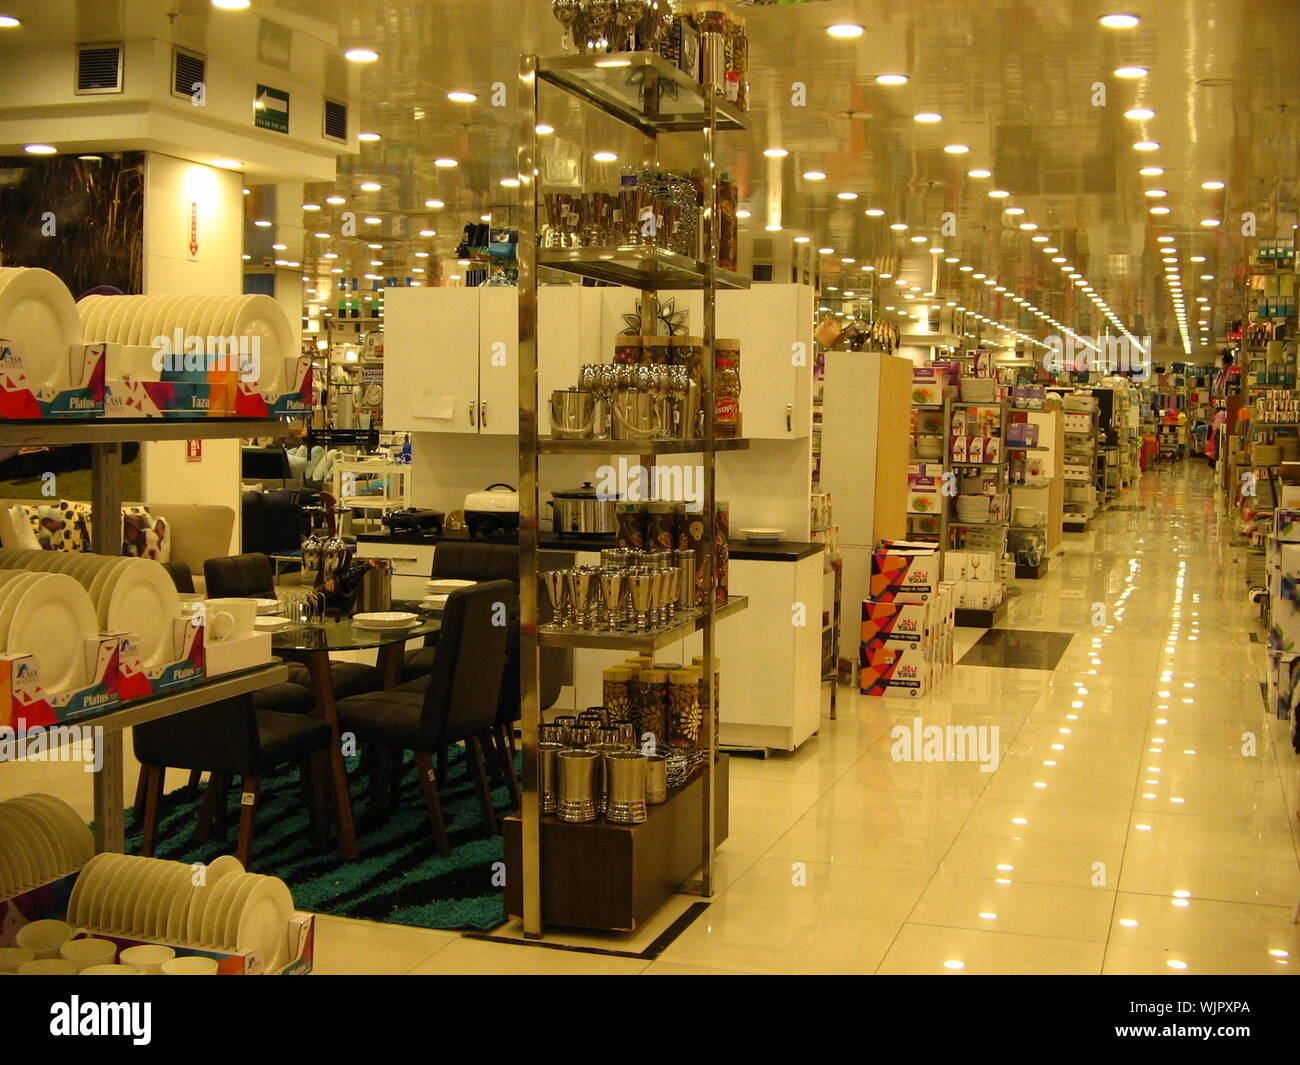 Traki store, inside view, Venezuelan retail company Stock Photo